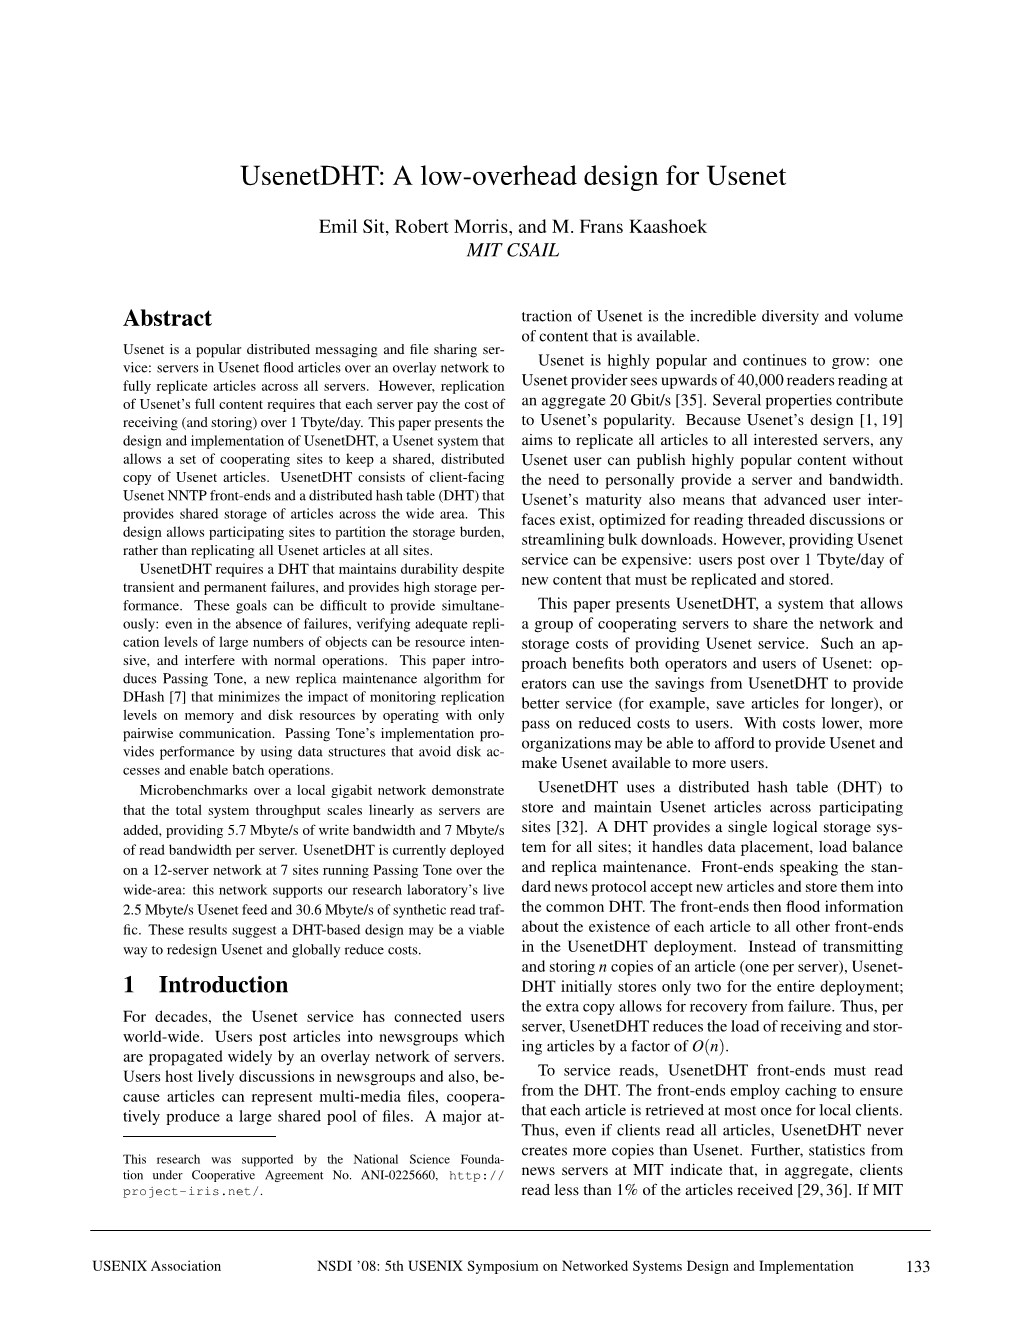 Usenetdht: a Low-Overhead Design for Usenet